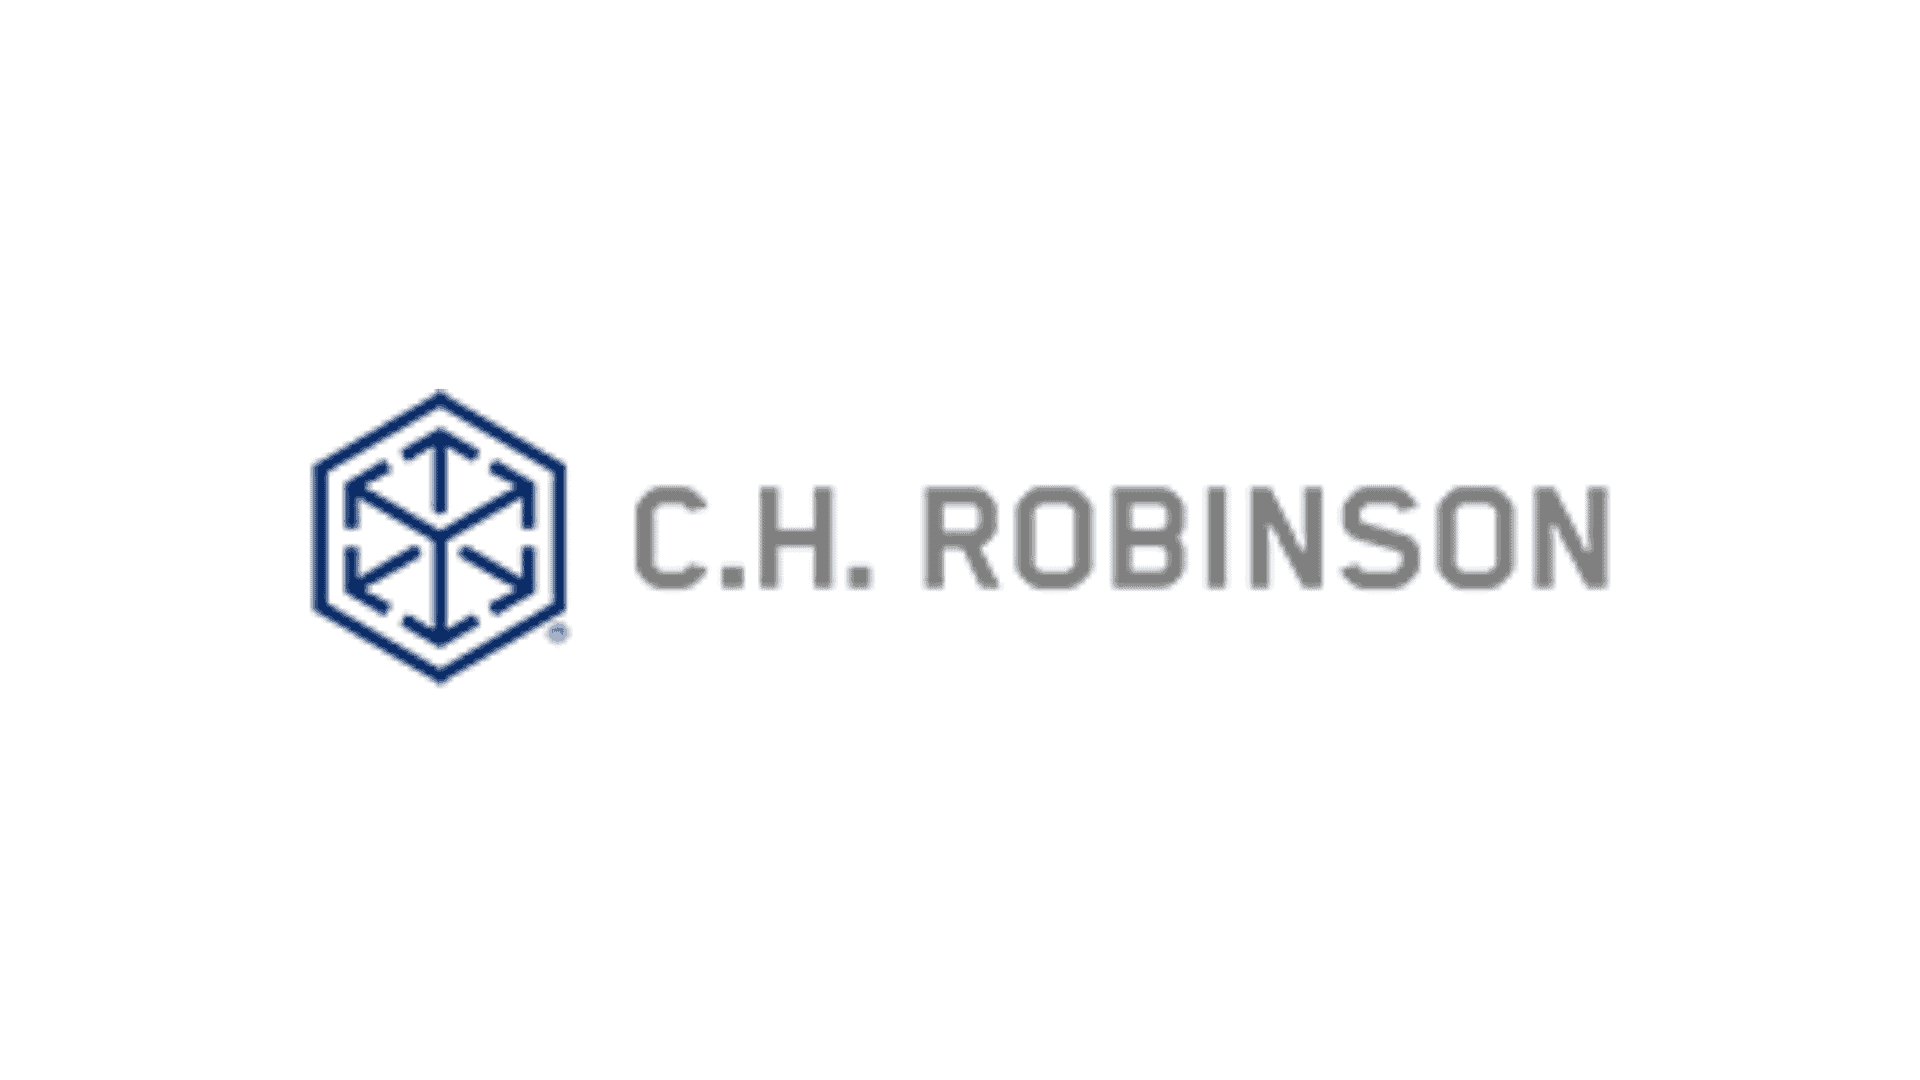 C. H. Robinson logo